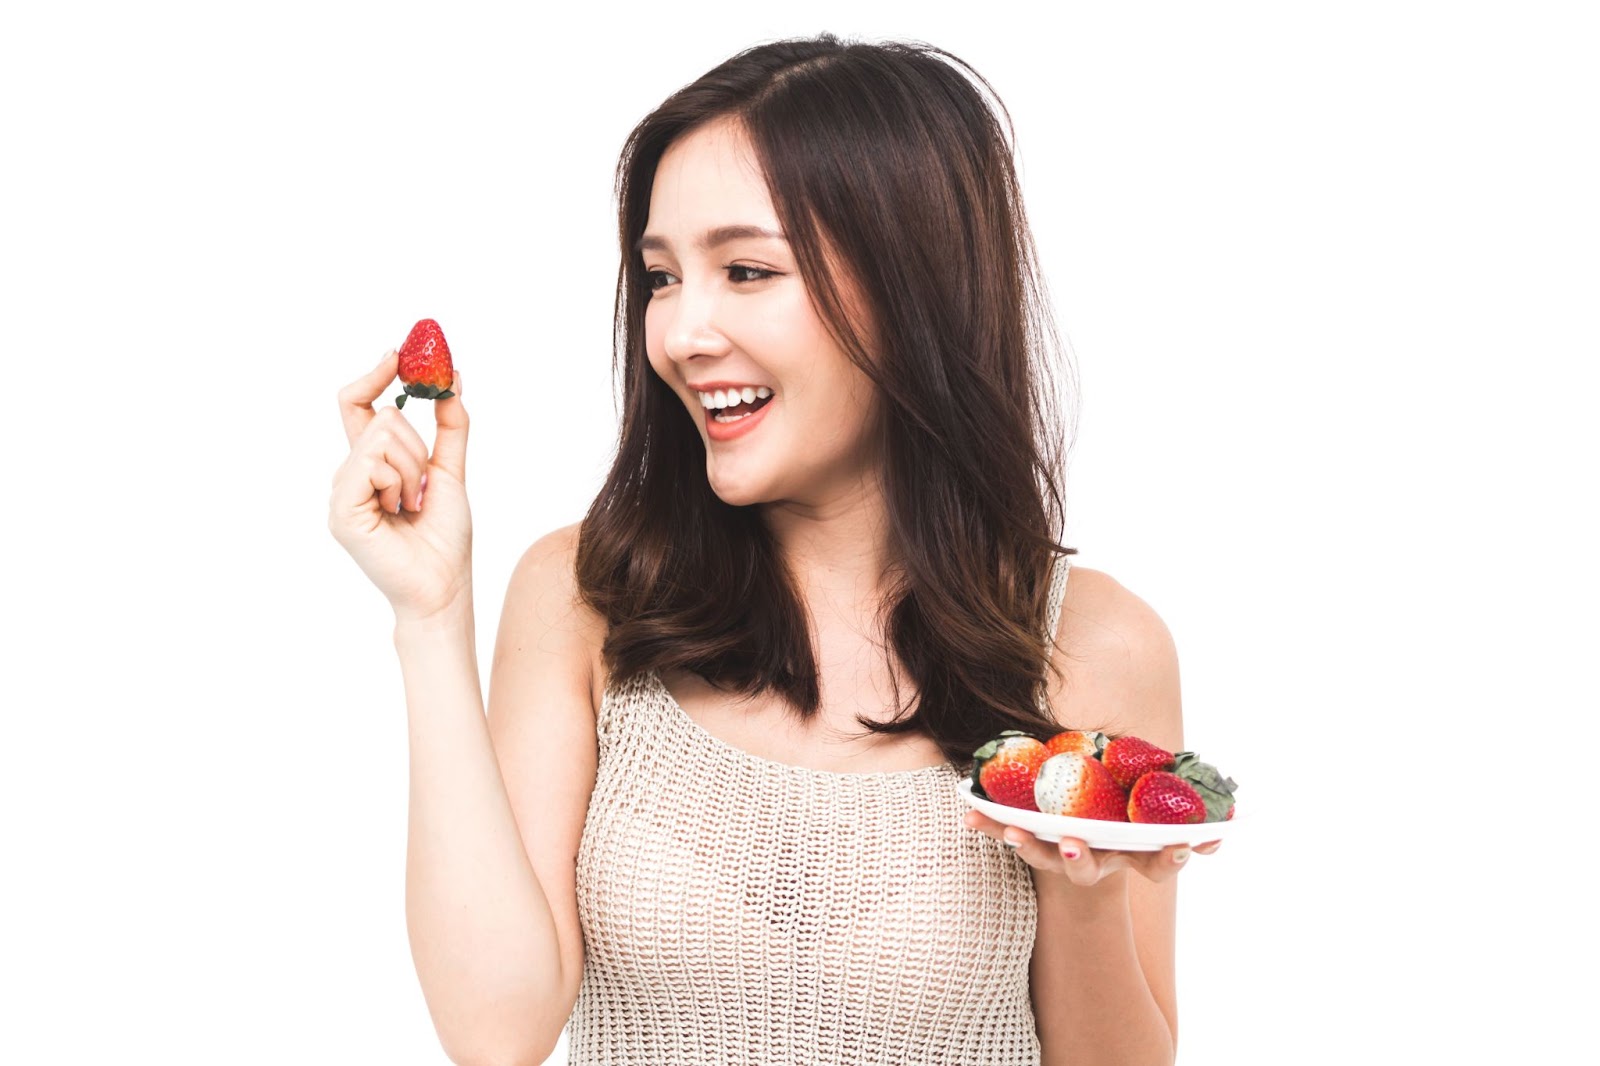 Woman eating fresh strawberry on white background.